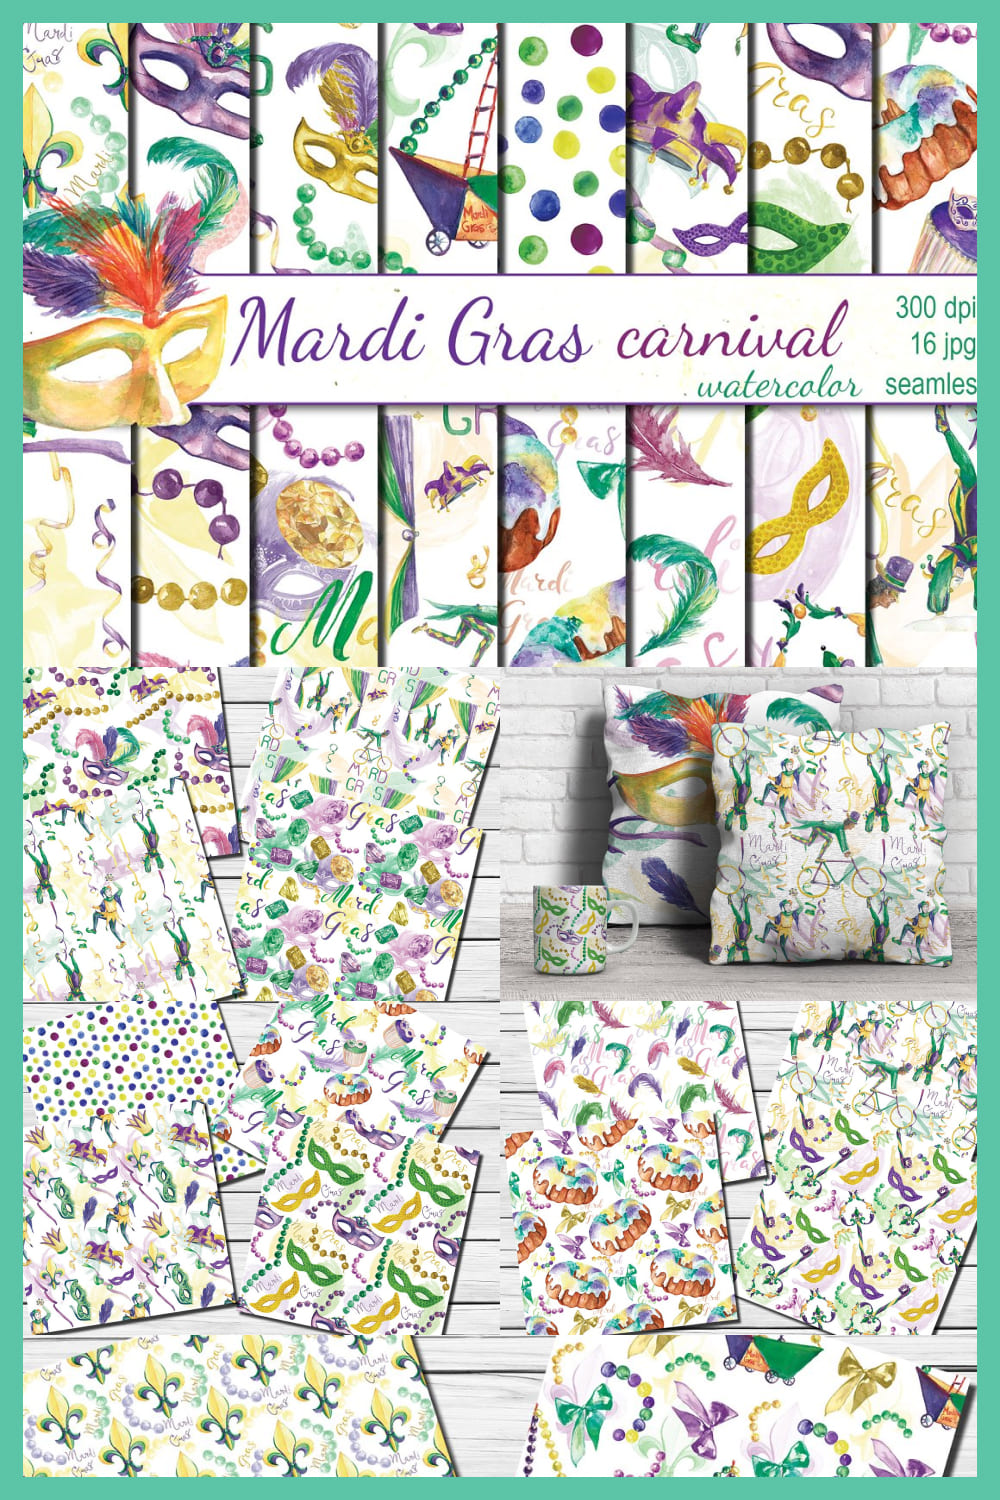 03 mardi gras carnival patterns 1000x1500 241